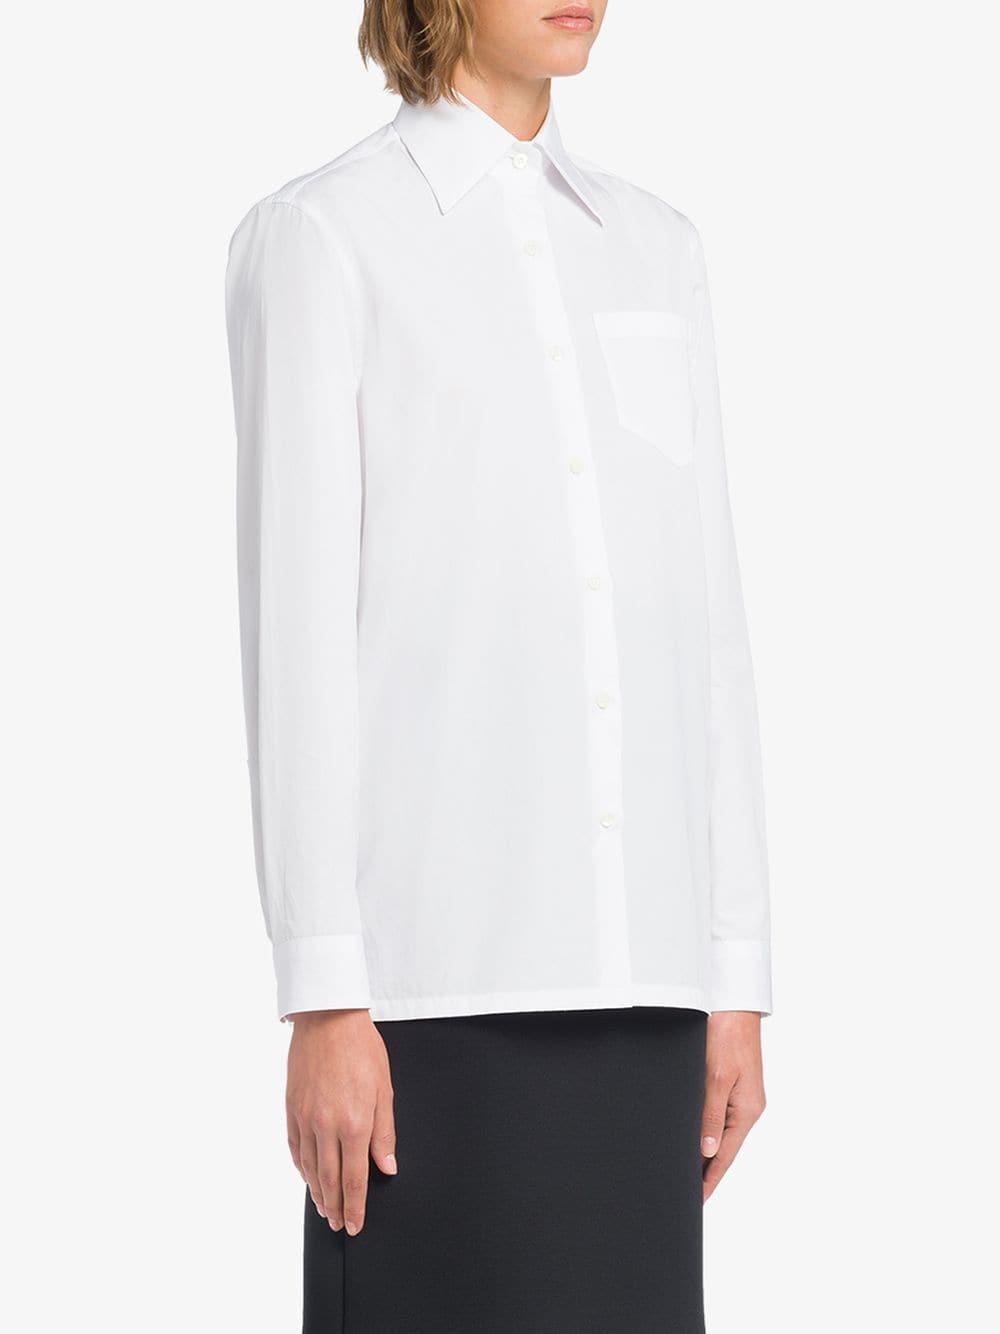 Prada Cotton Classic Poplin Shirt in White - Lyst